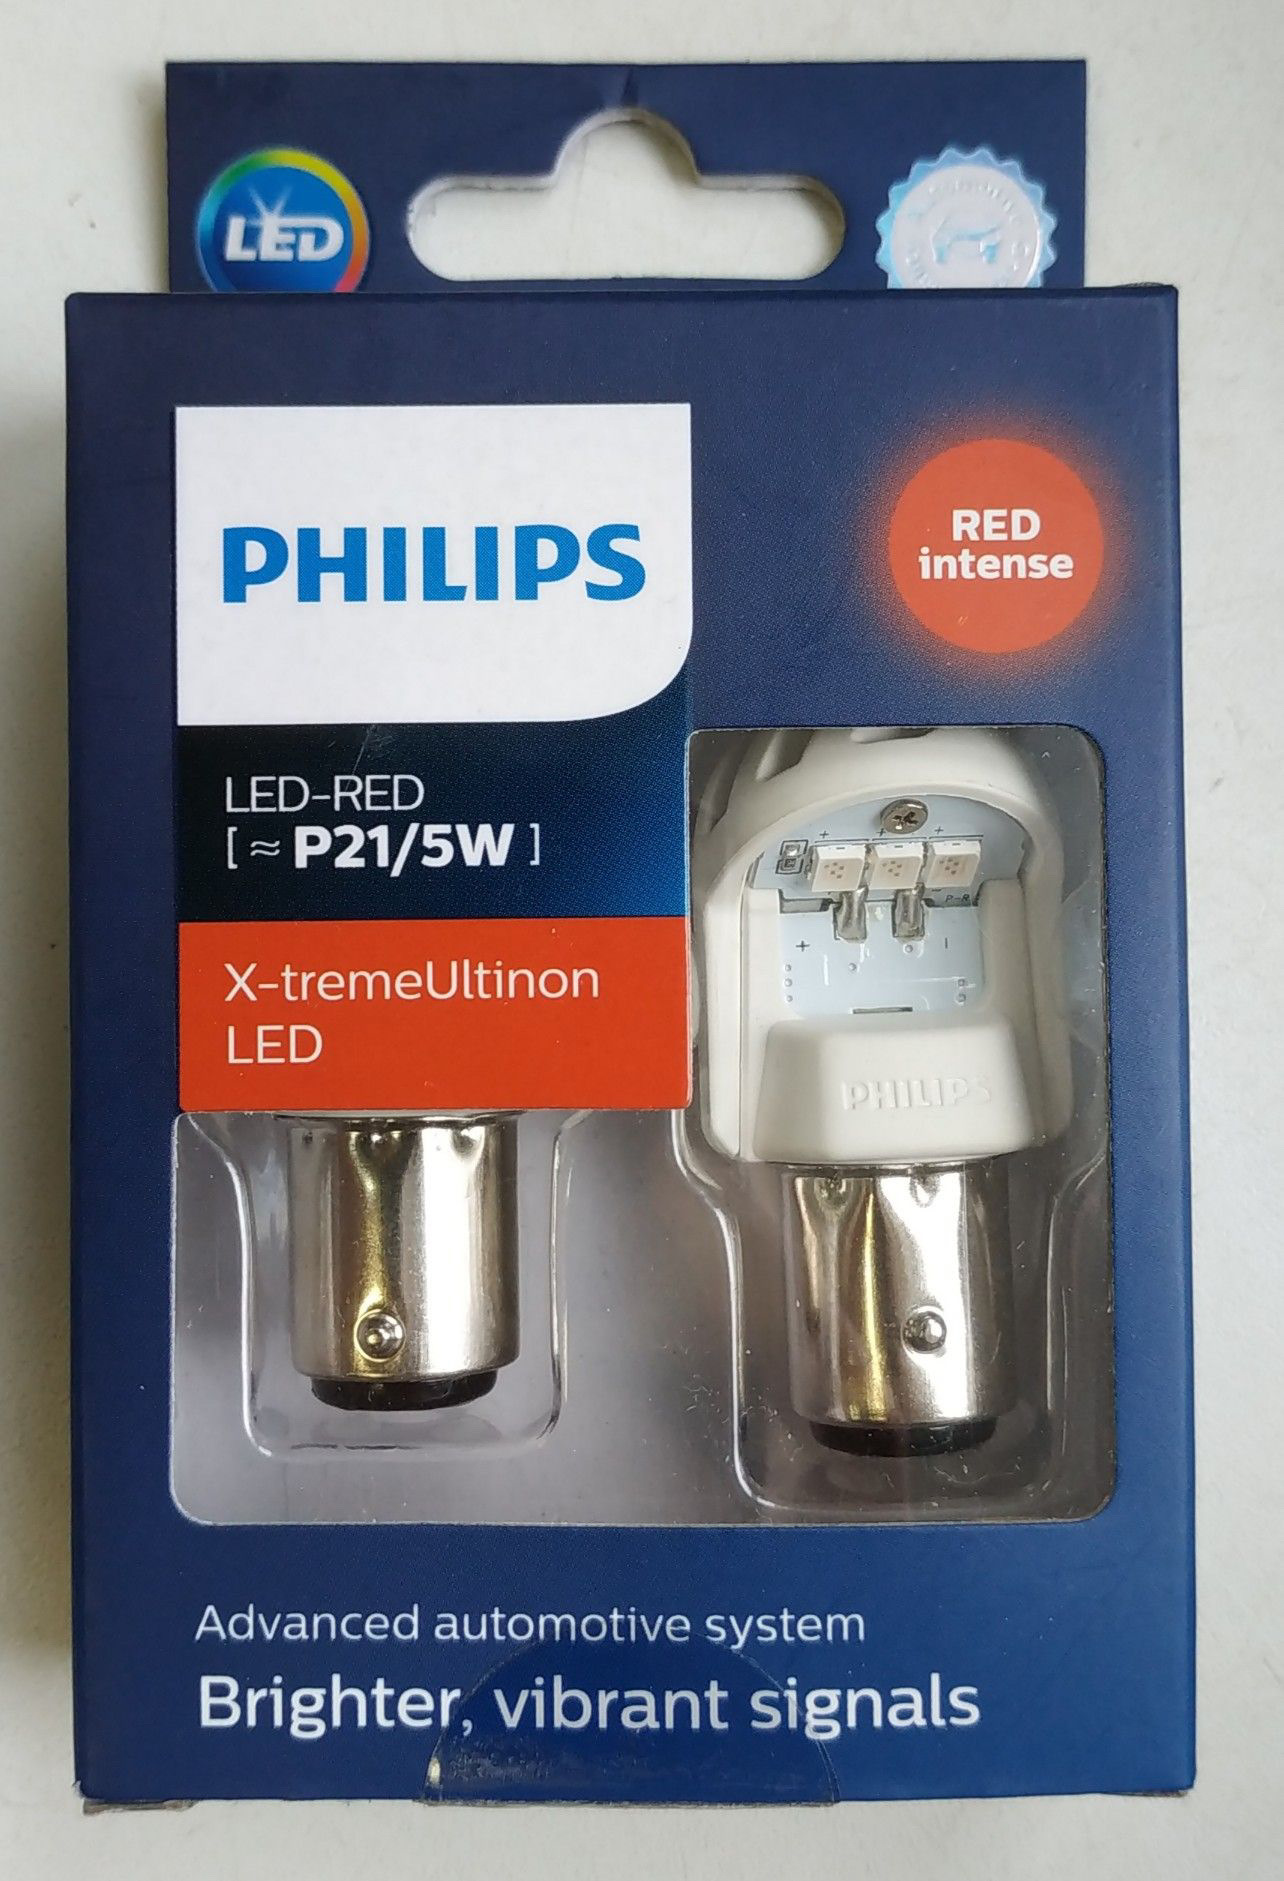 Led philips 12v. Лампа светодиодная p21w Philips x-treme Ultinon led (белая). Лампа Osram p21/5w 12v led Red. Лампа Philips p21/5w 12v/24v led bay15d Red x-TREMEULTINON led, 2шт 11499xurx2. Лампа светодиодная Philips p21/5 led Red 12v bay15d x2.